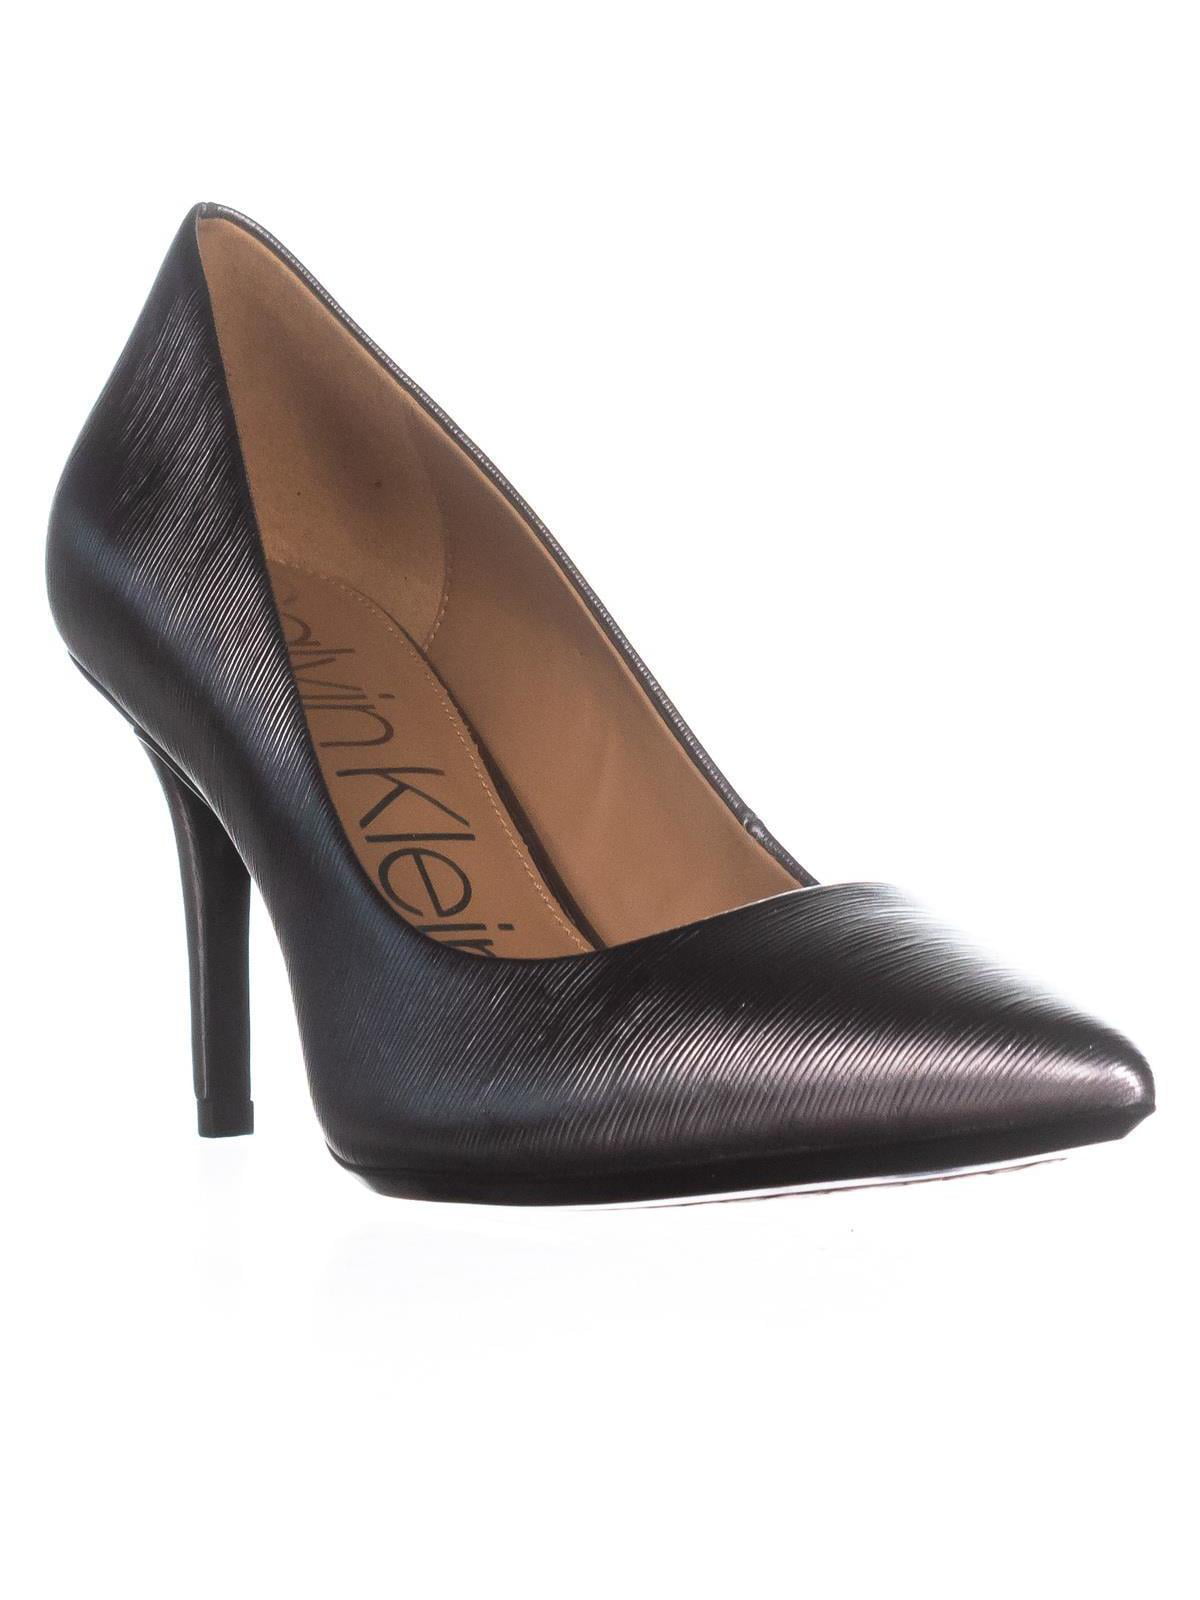 Womens Calvin Klein Gayle Classic Pump Heels, Anthracite, 9 US / 39 EU -  